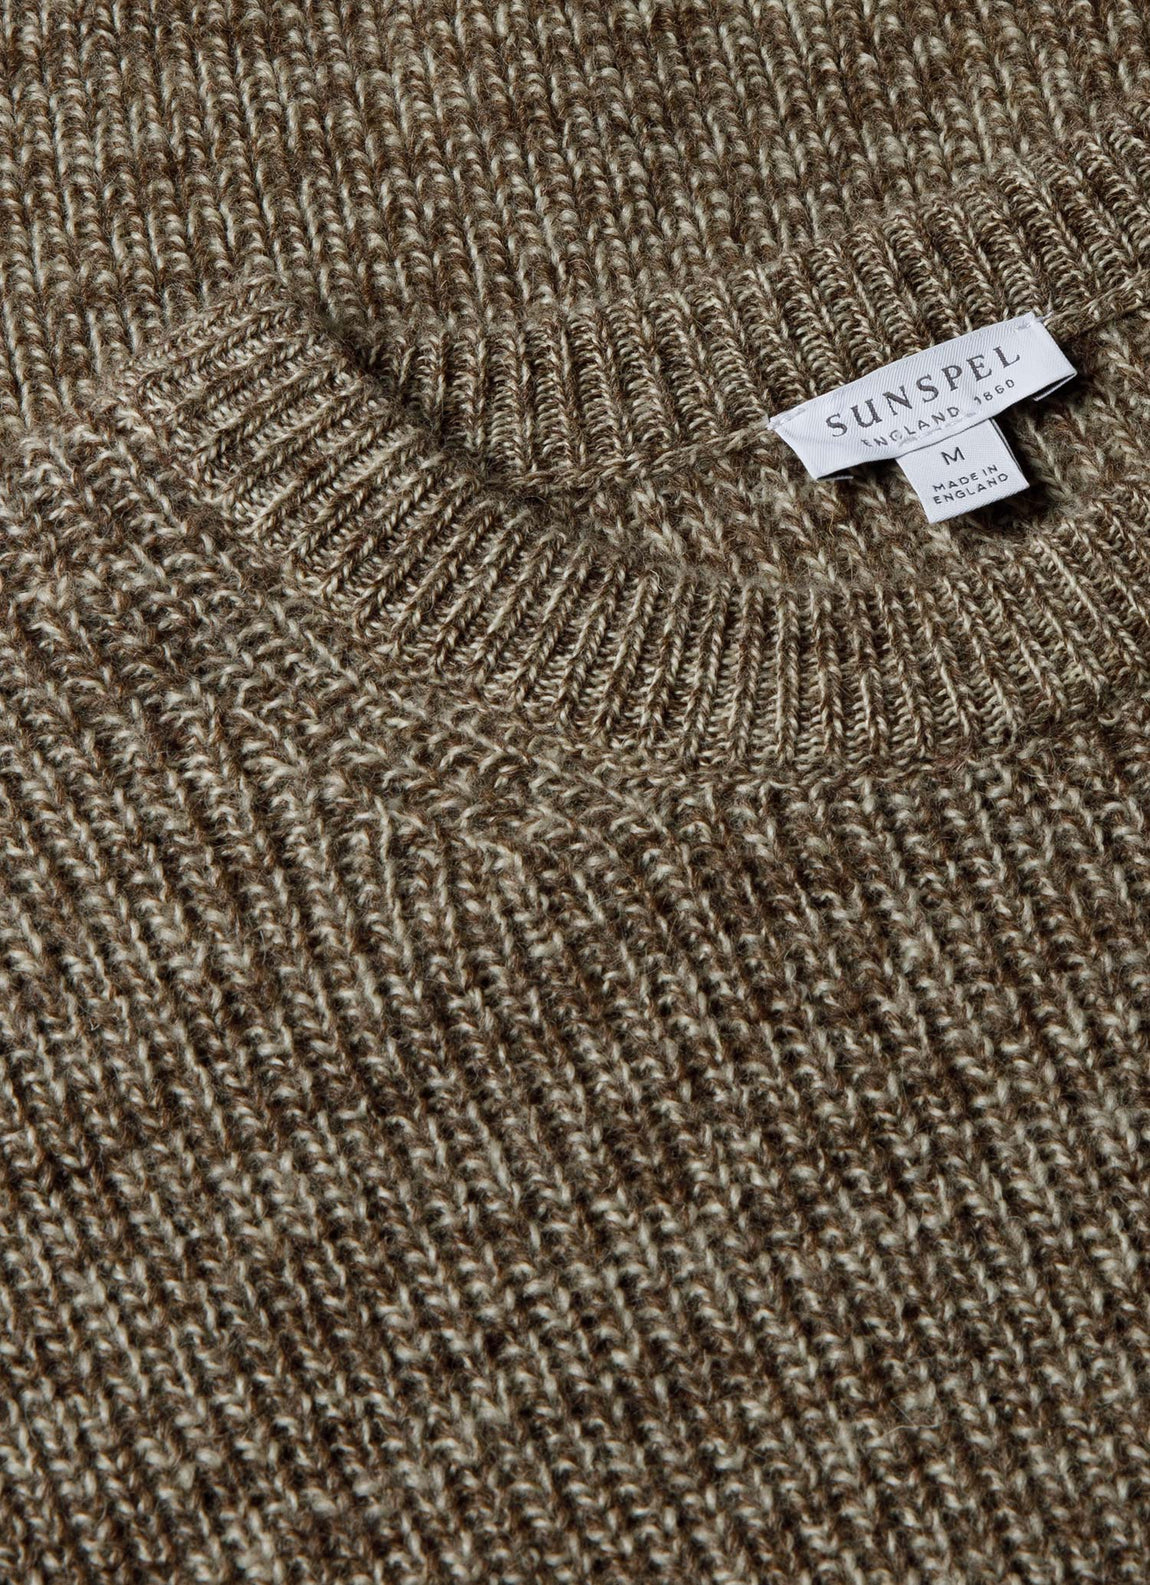 Men's Luxury British Wool Jumper in Natural Ecru/Brown Twist | Sunspel